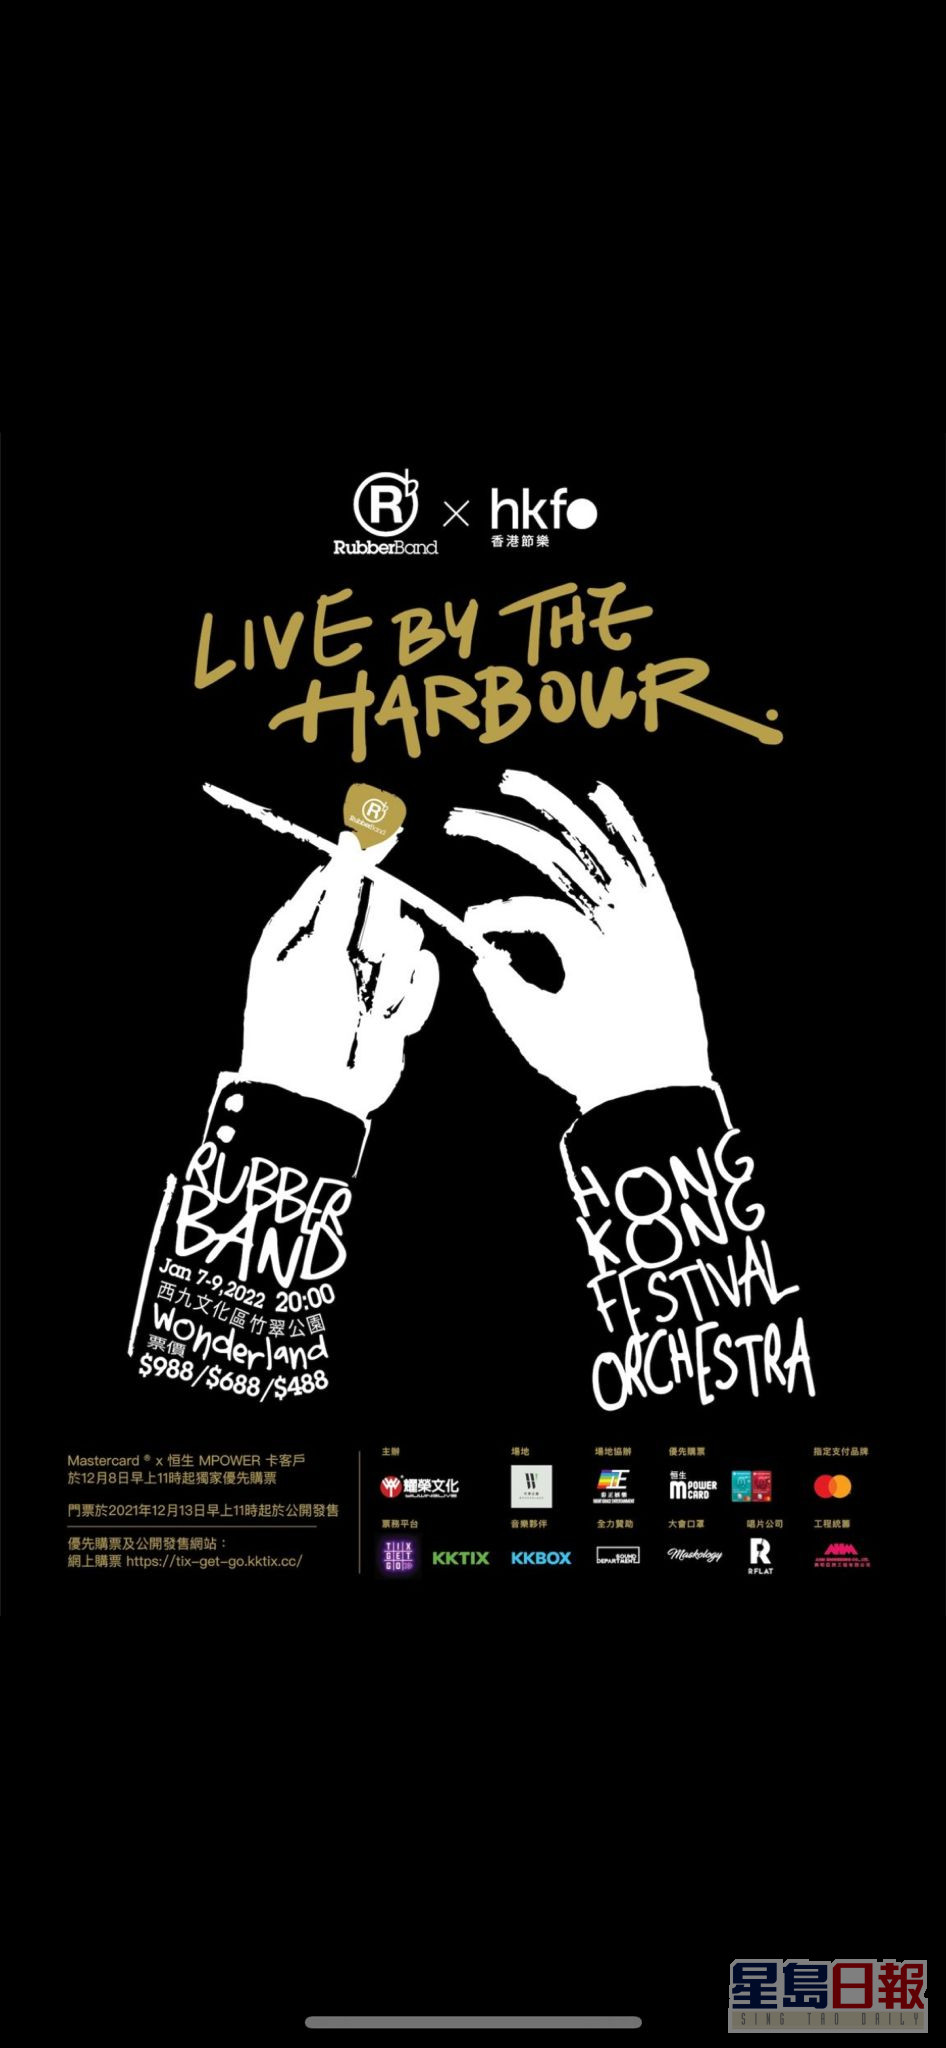 RubberBand x 香港節慶管弦樂團 「Liveby the Harbour」• 音樂會將會延期。